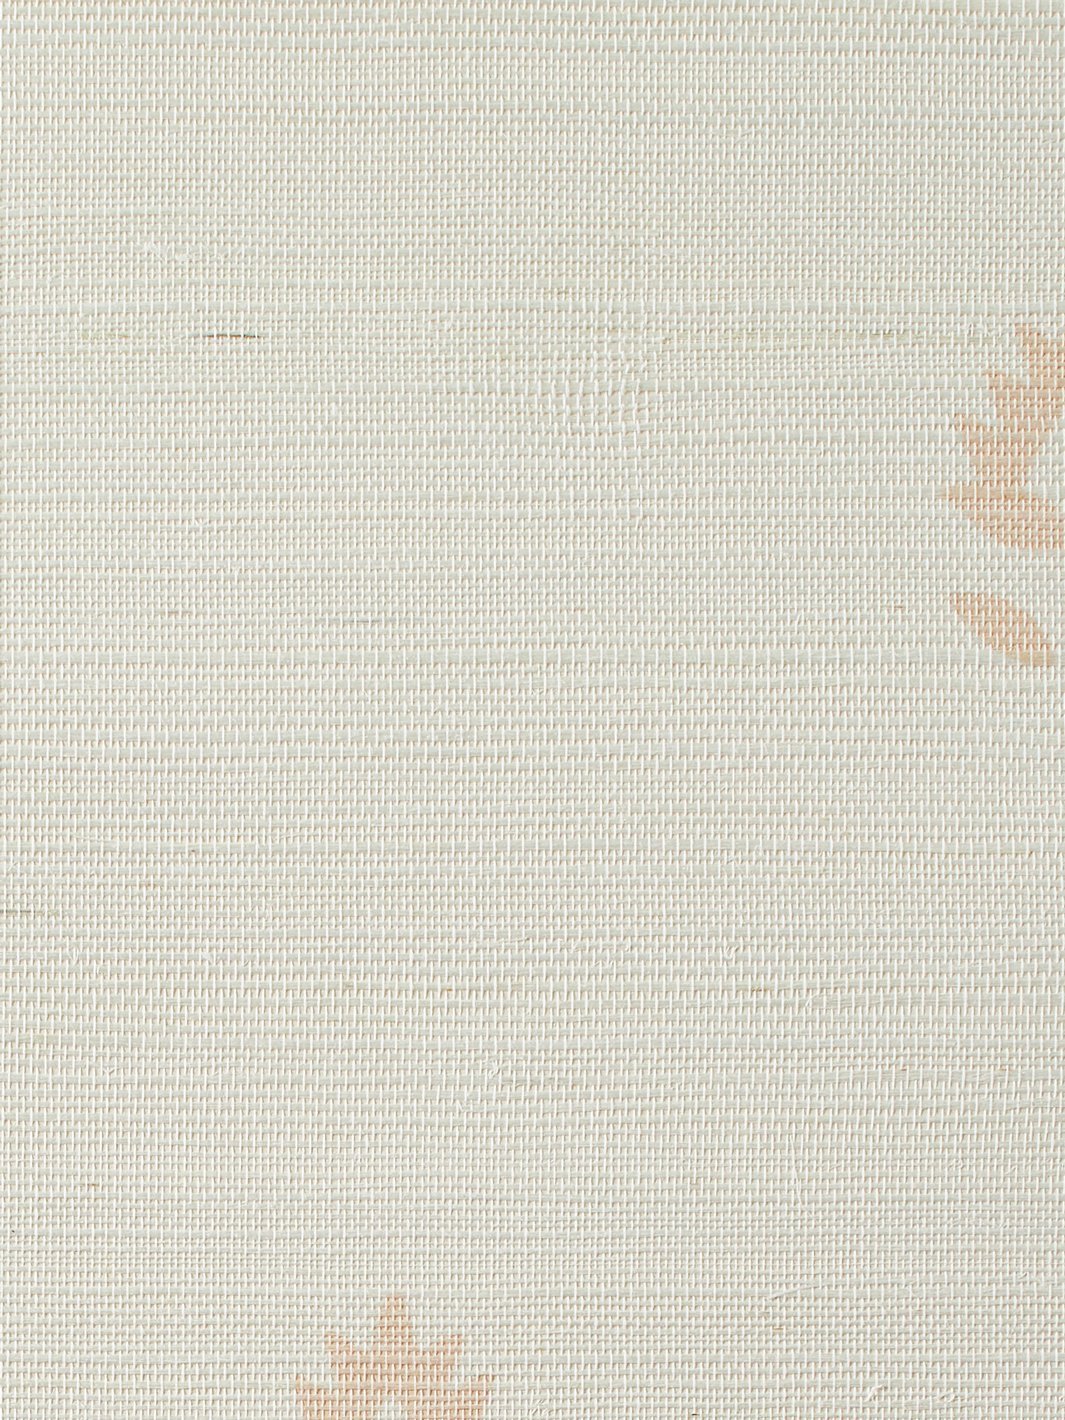 'Large Block Print' Grasscloth' Wallpaper by Sugar Paper - Pink